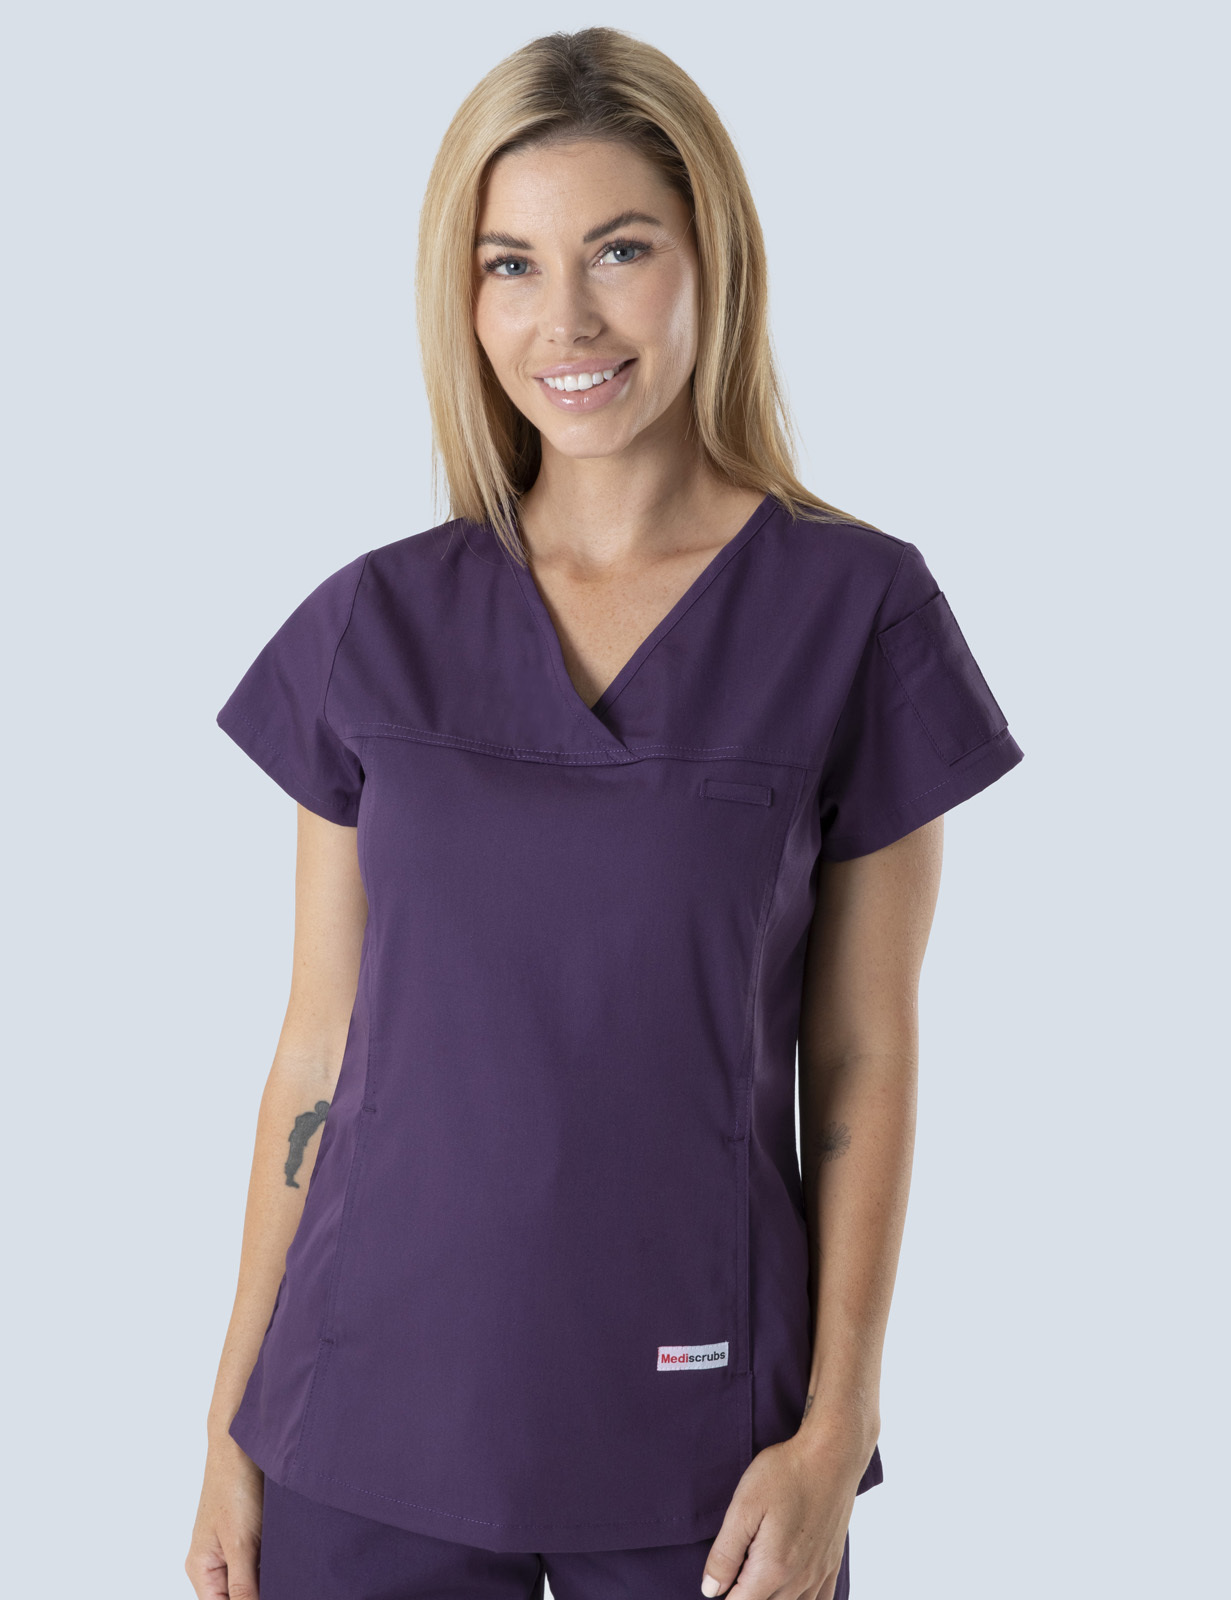 Queensland Children's Hospital Emergency Department Clinical Nurse  Uniform Top Bundle  (Women's Fit Top in Aubergine  incl Logos)